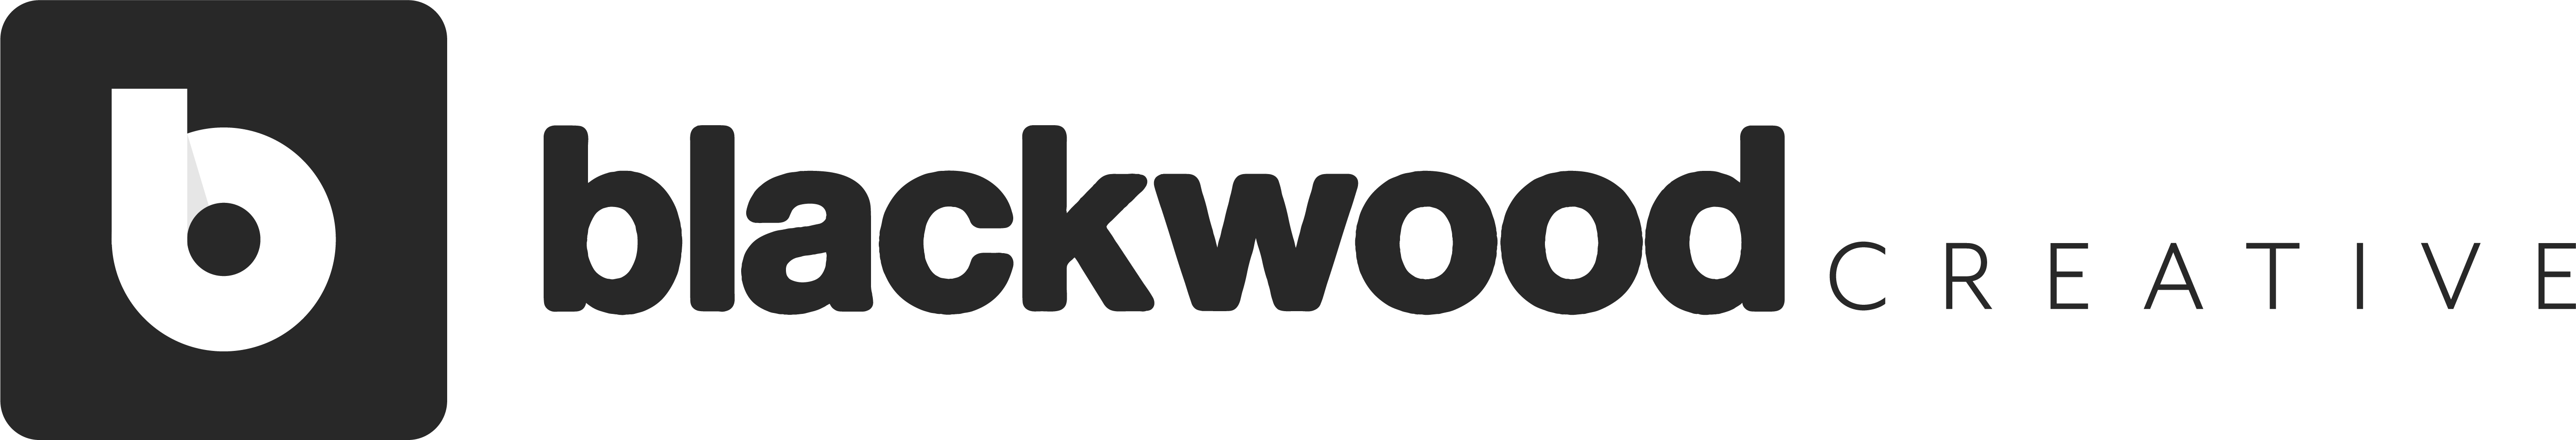 Blackwood creative marketing agency south bend indiana